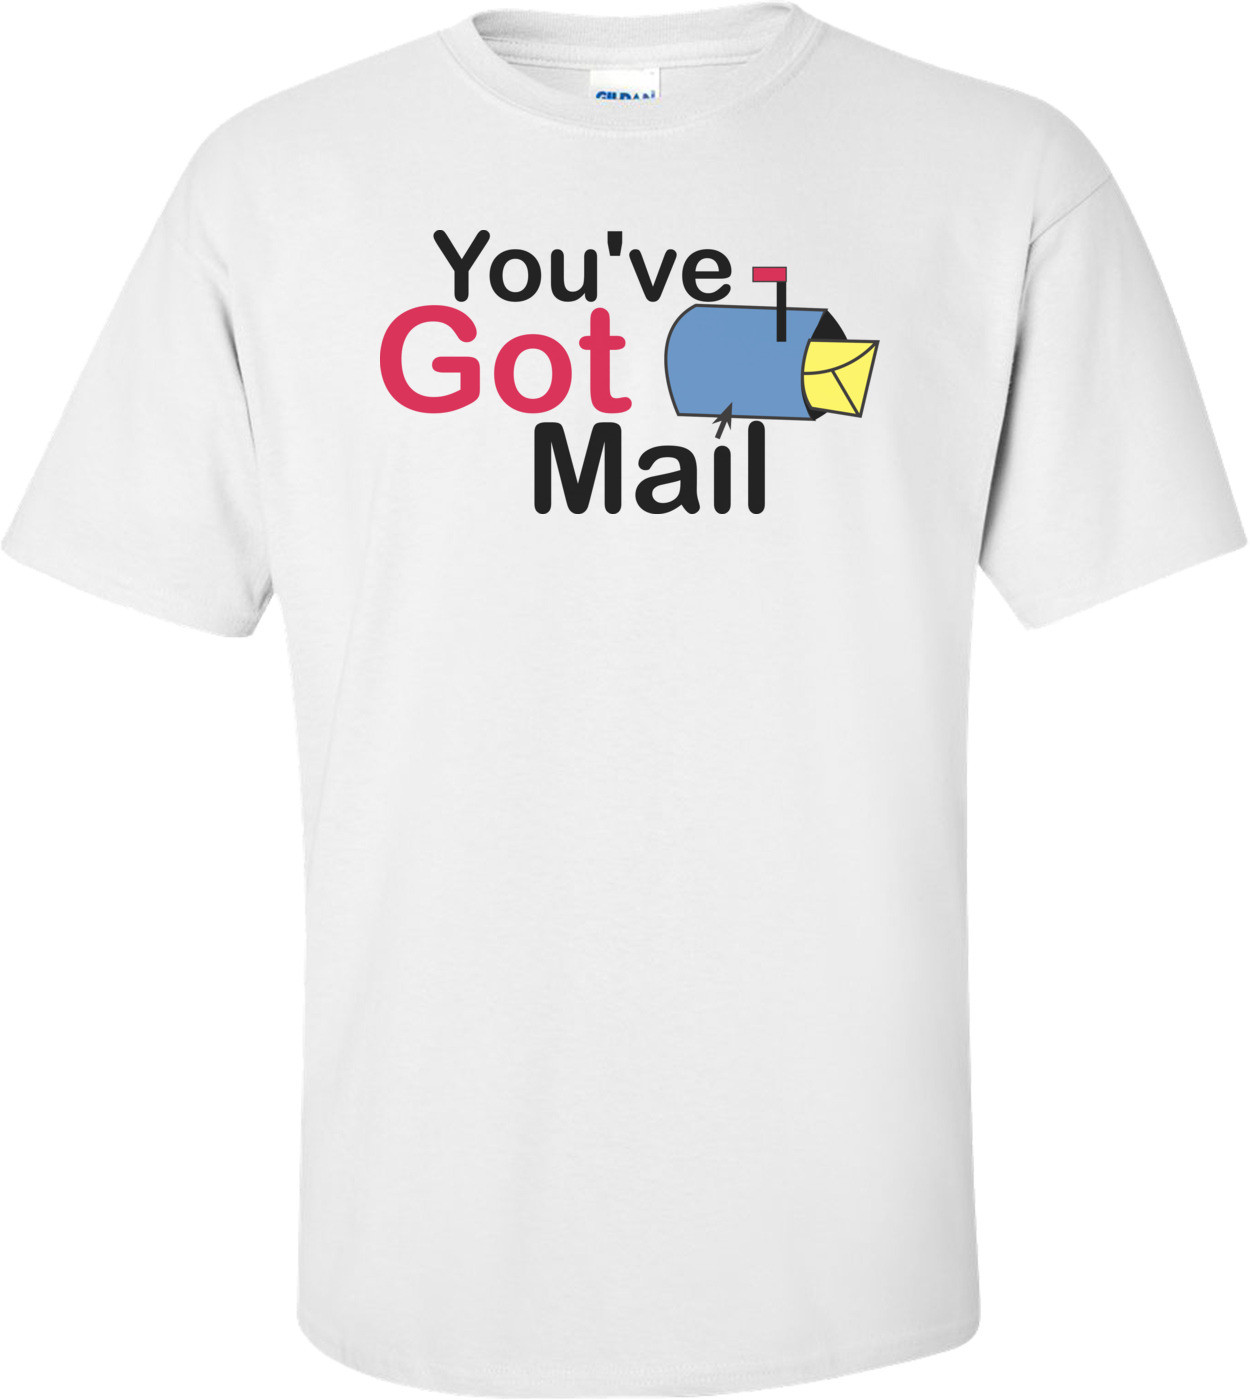 You've Got Mail T-shirt